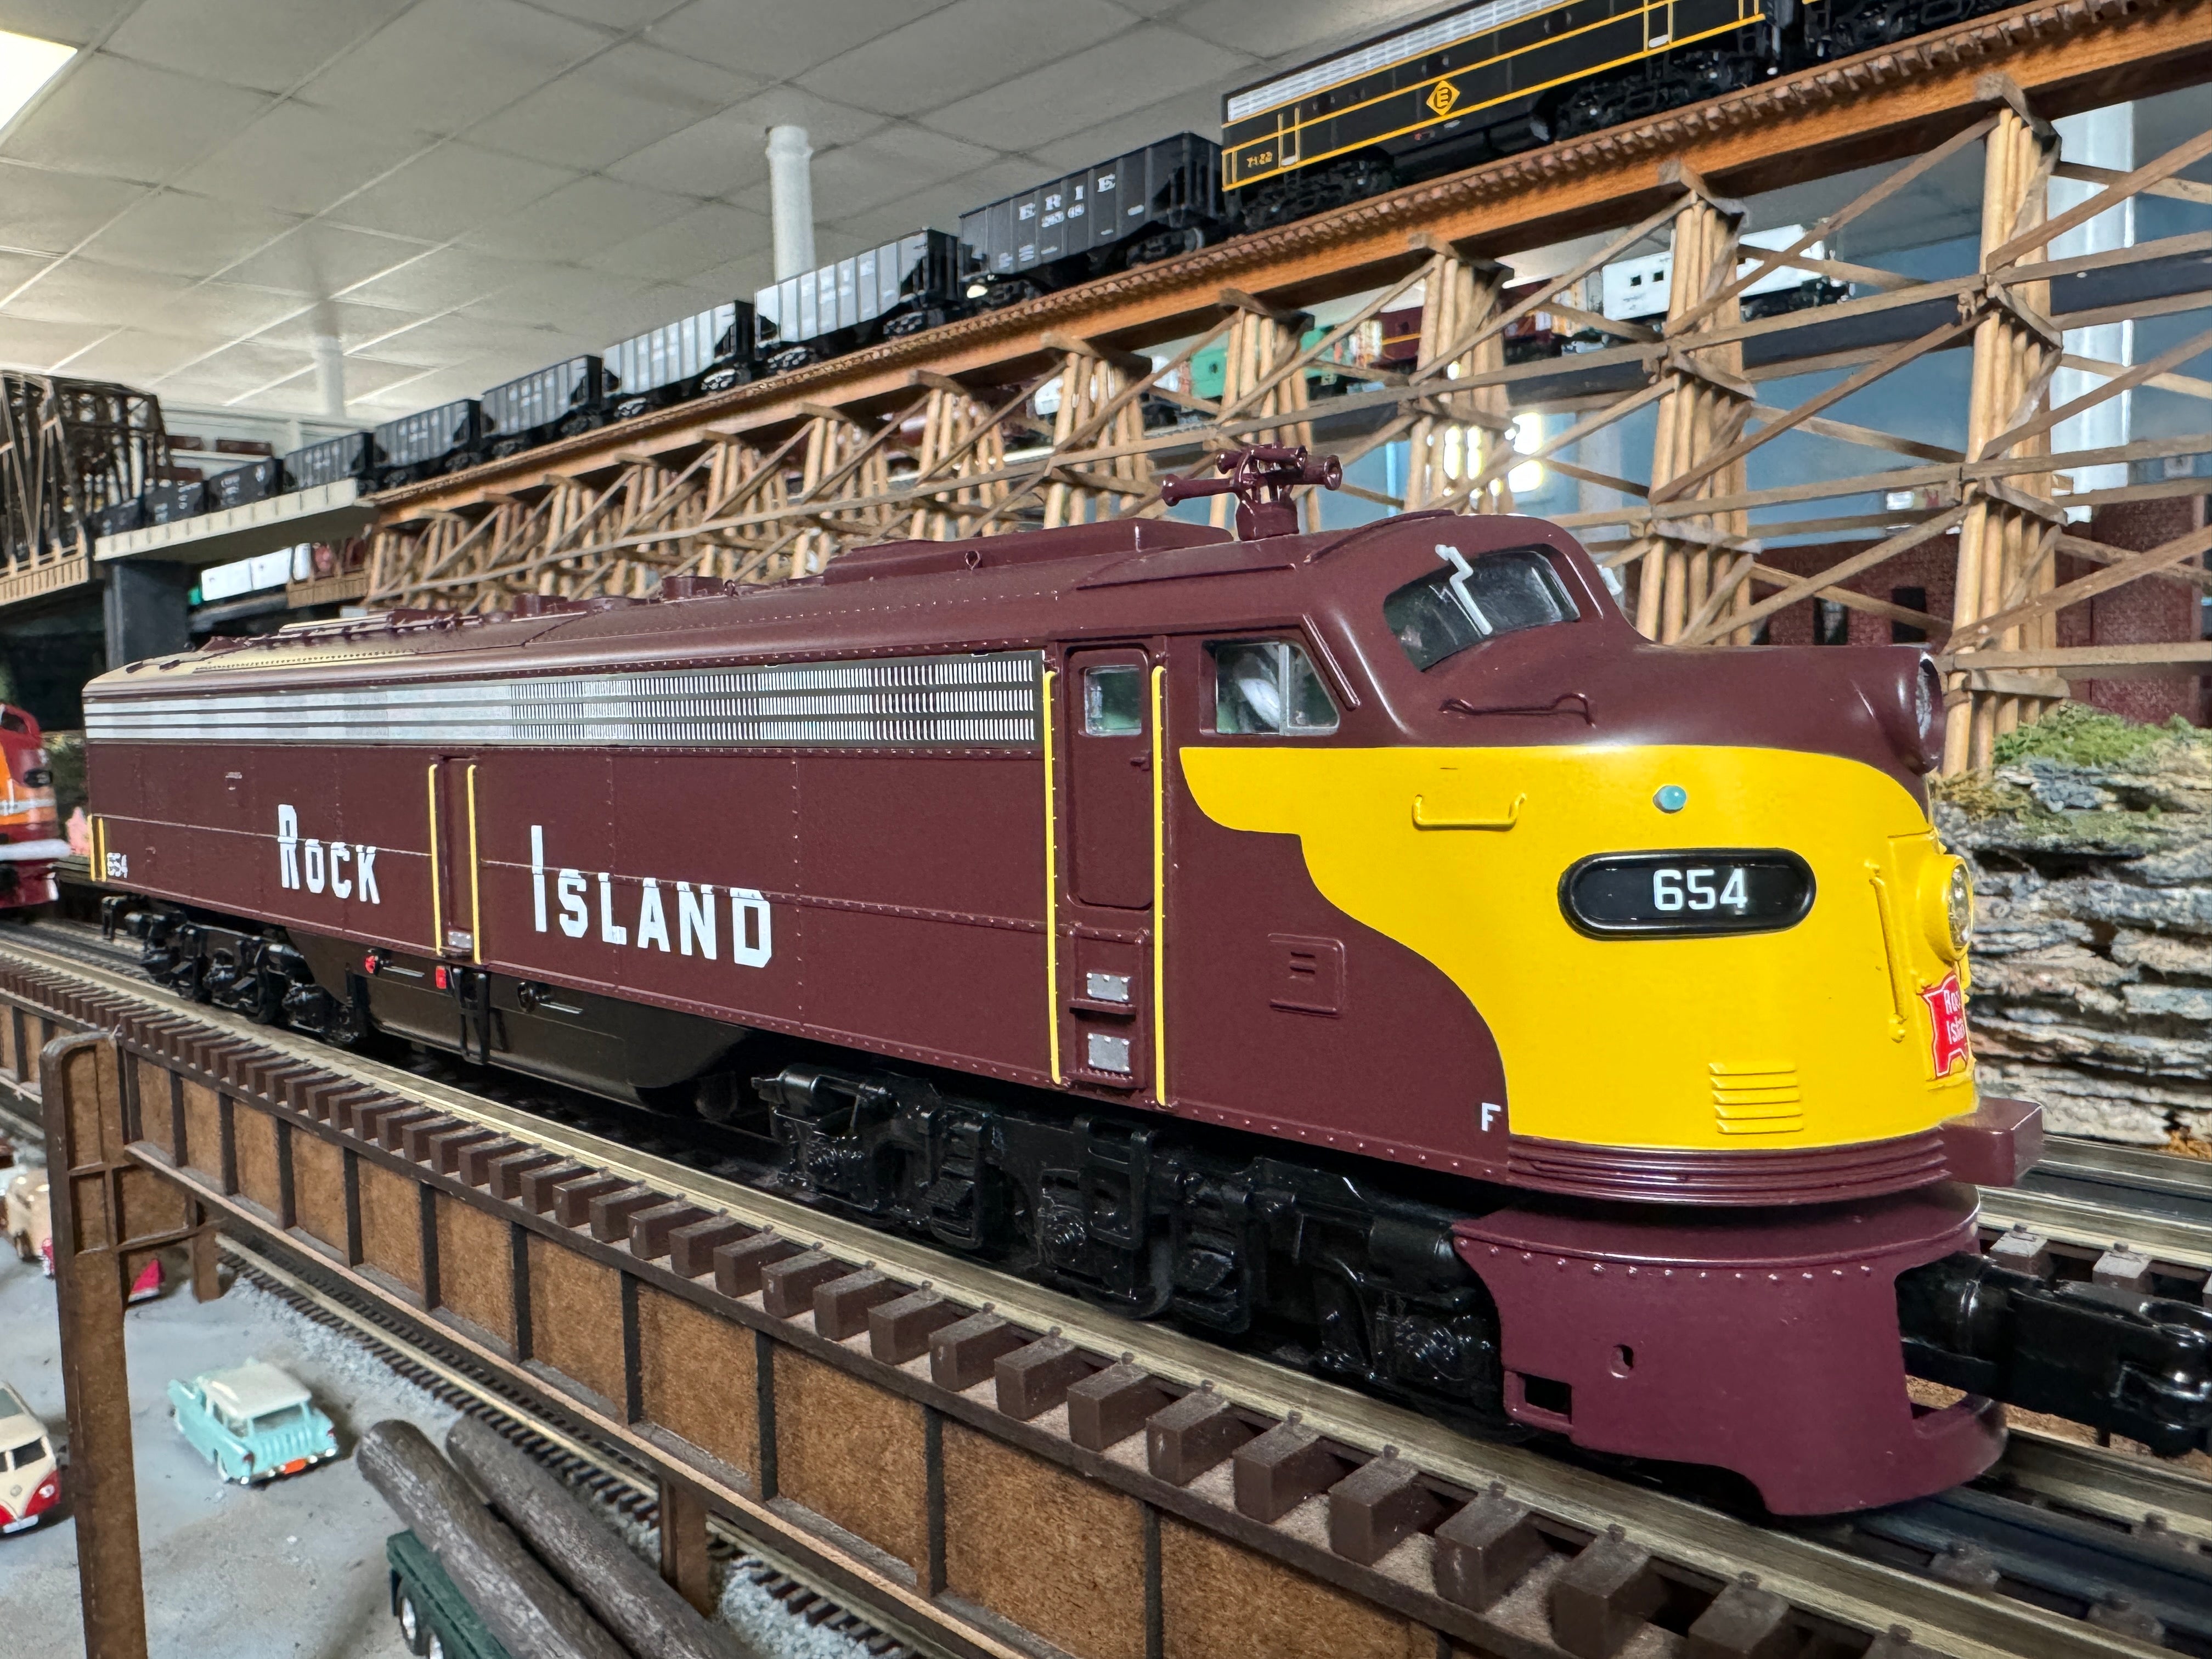 Atlas O 30138243 - Premier - E8 Diesel Locomotive "Rock Island" #652 w/ PS3 (Un-Powered)